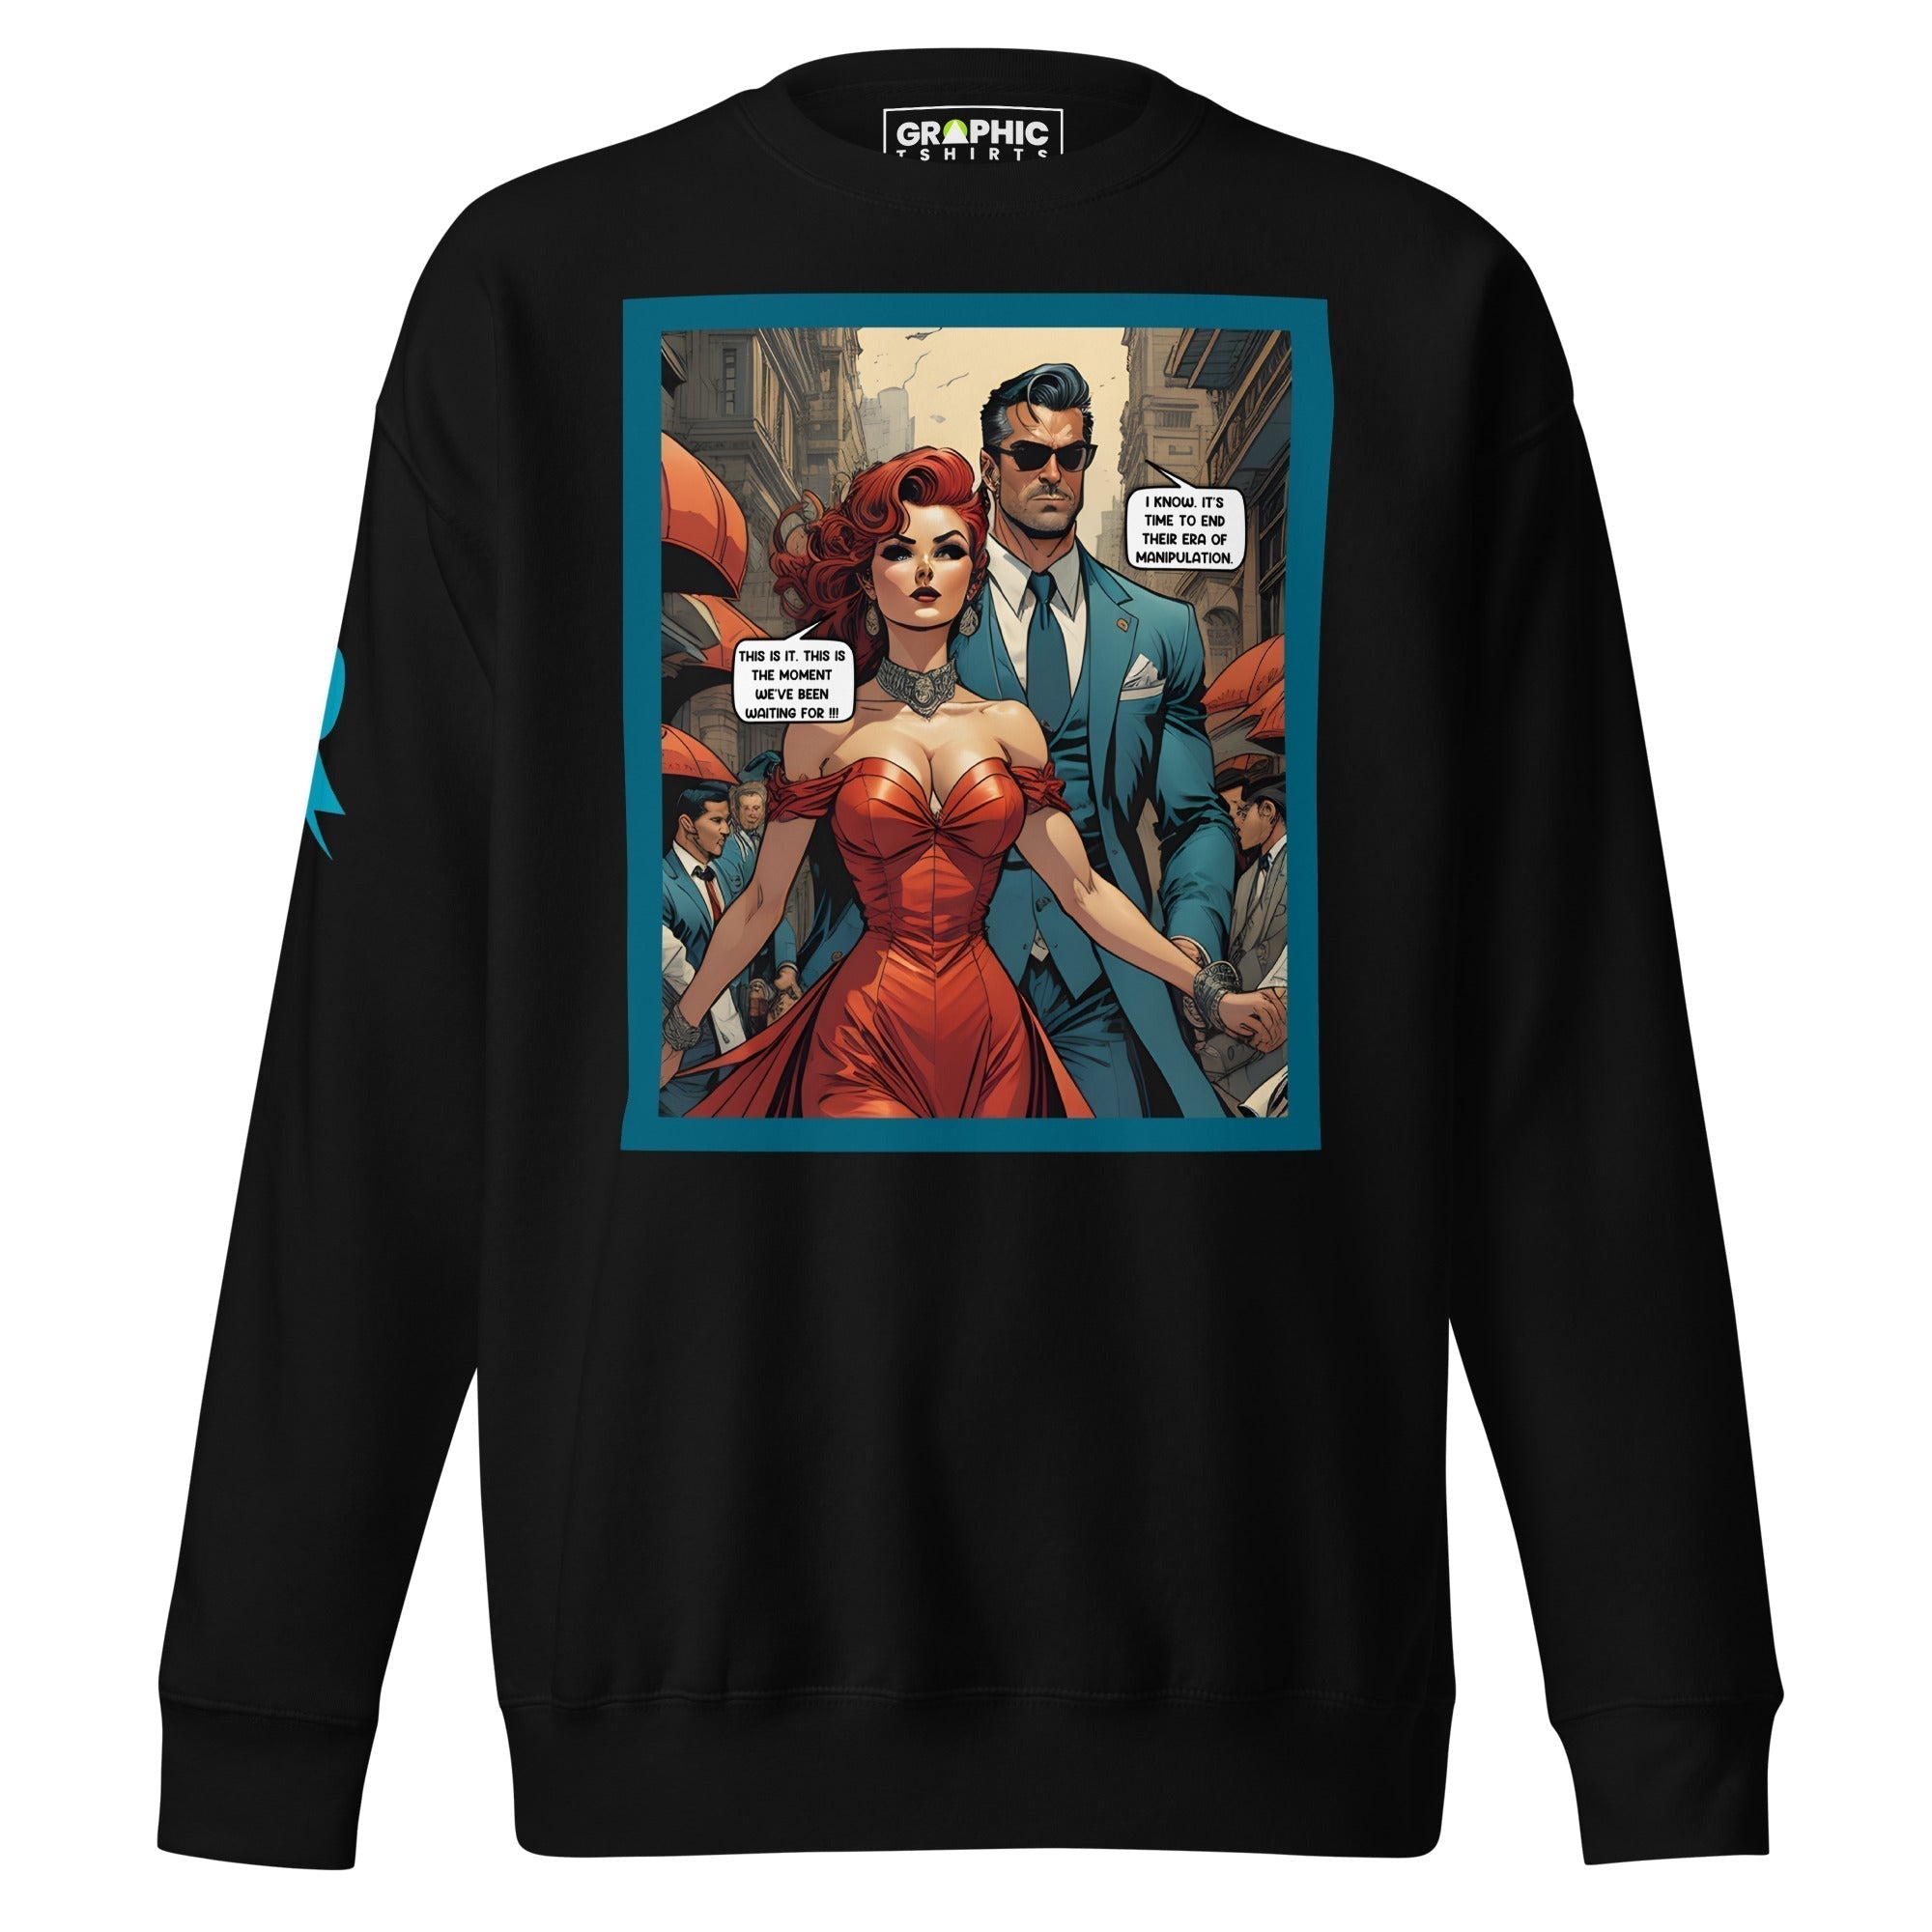 Unisex Premium Sweatshirt - Retribution: Heroes Unleashed v.34 - GRAPHIC T-SHIRTS